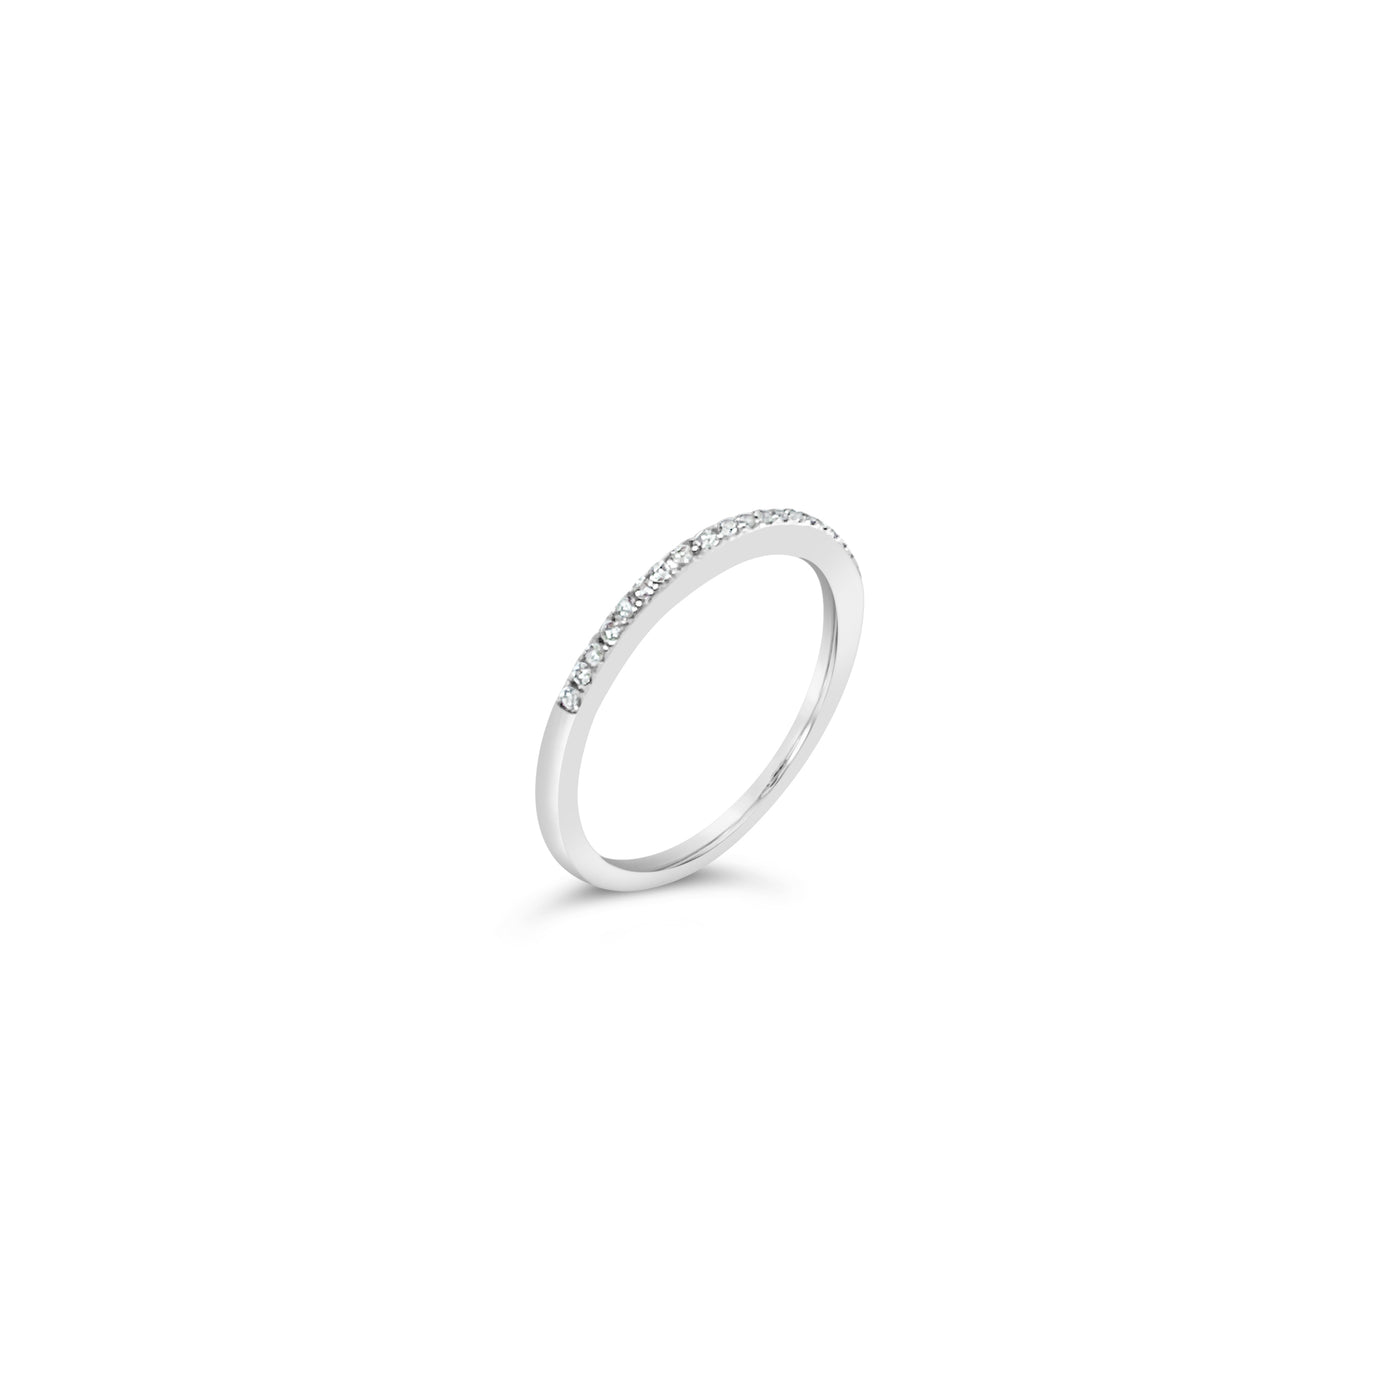 10Ct White Gold Ring With Round Brilliant Cut Diamonds Bead Set